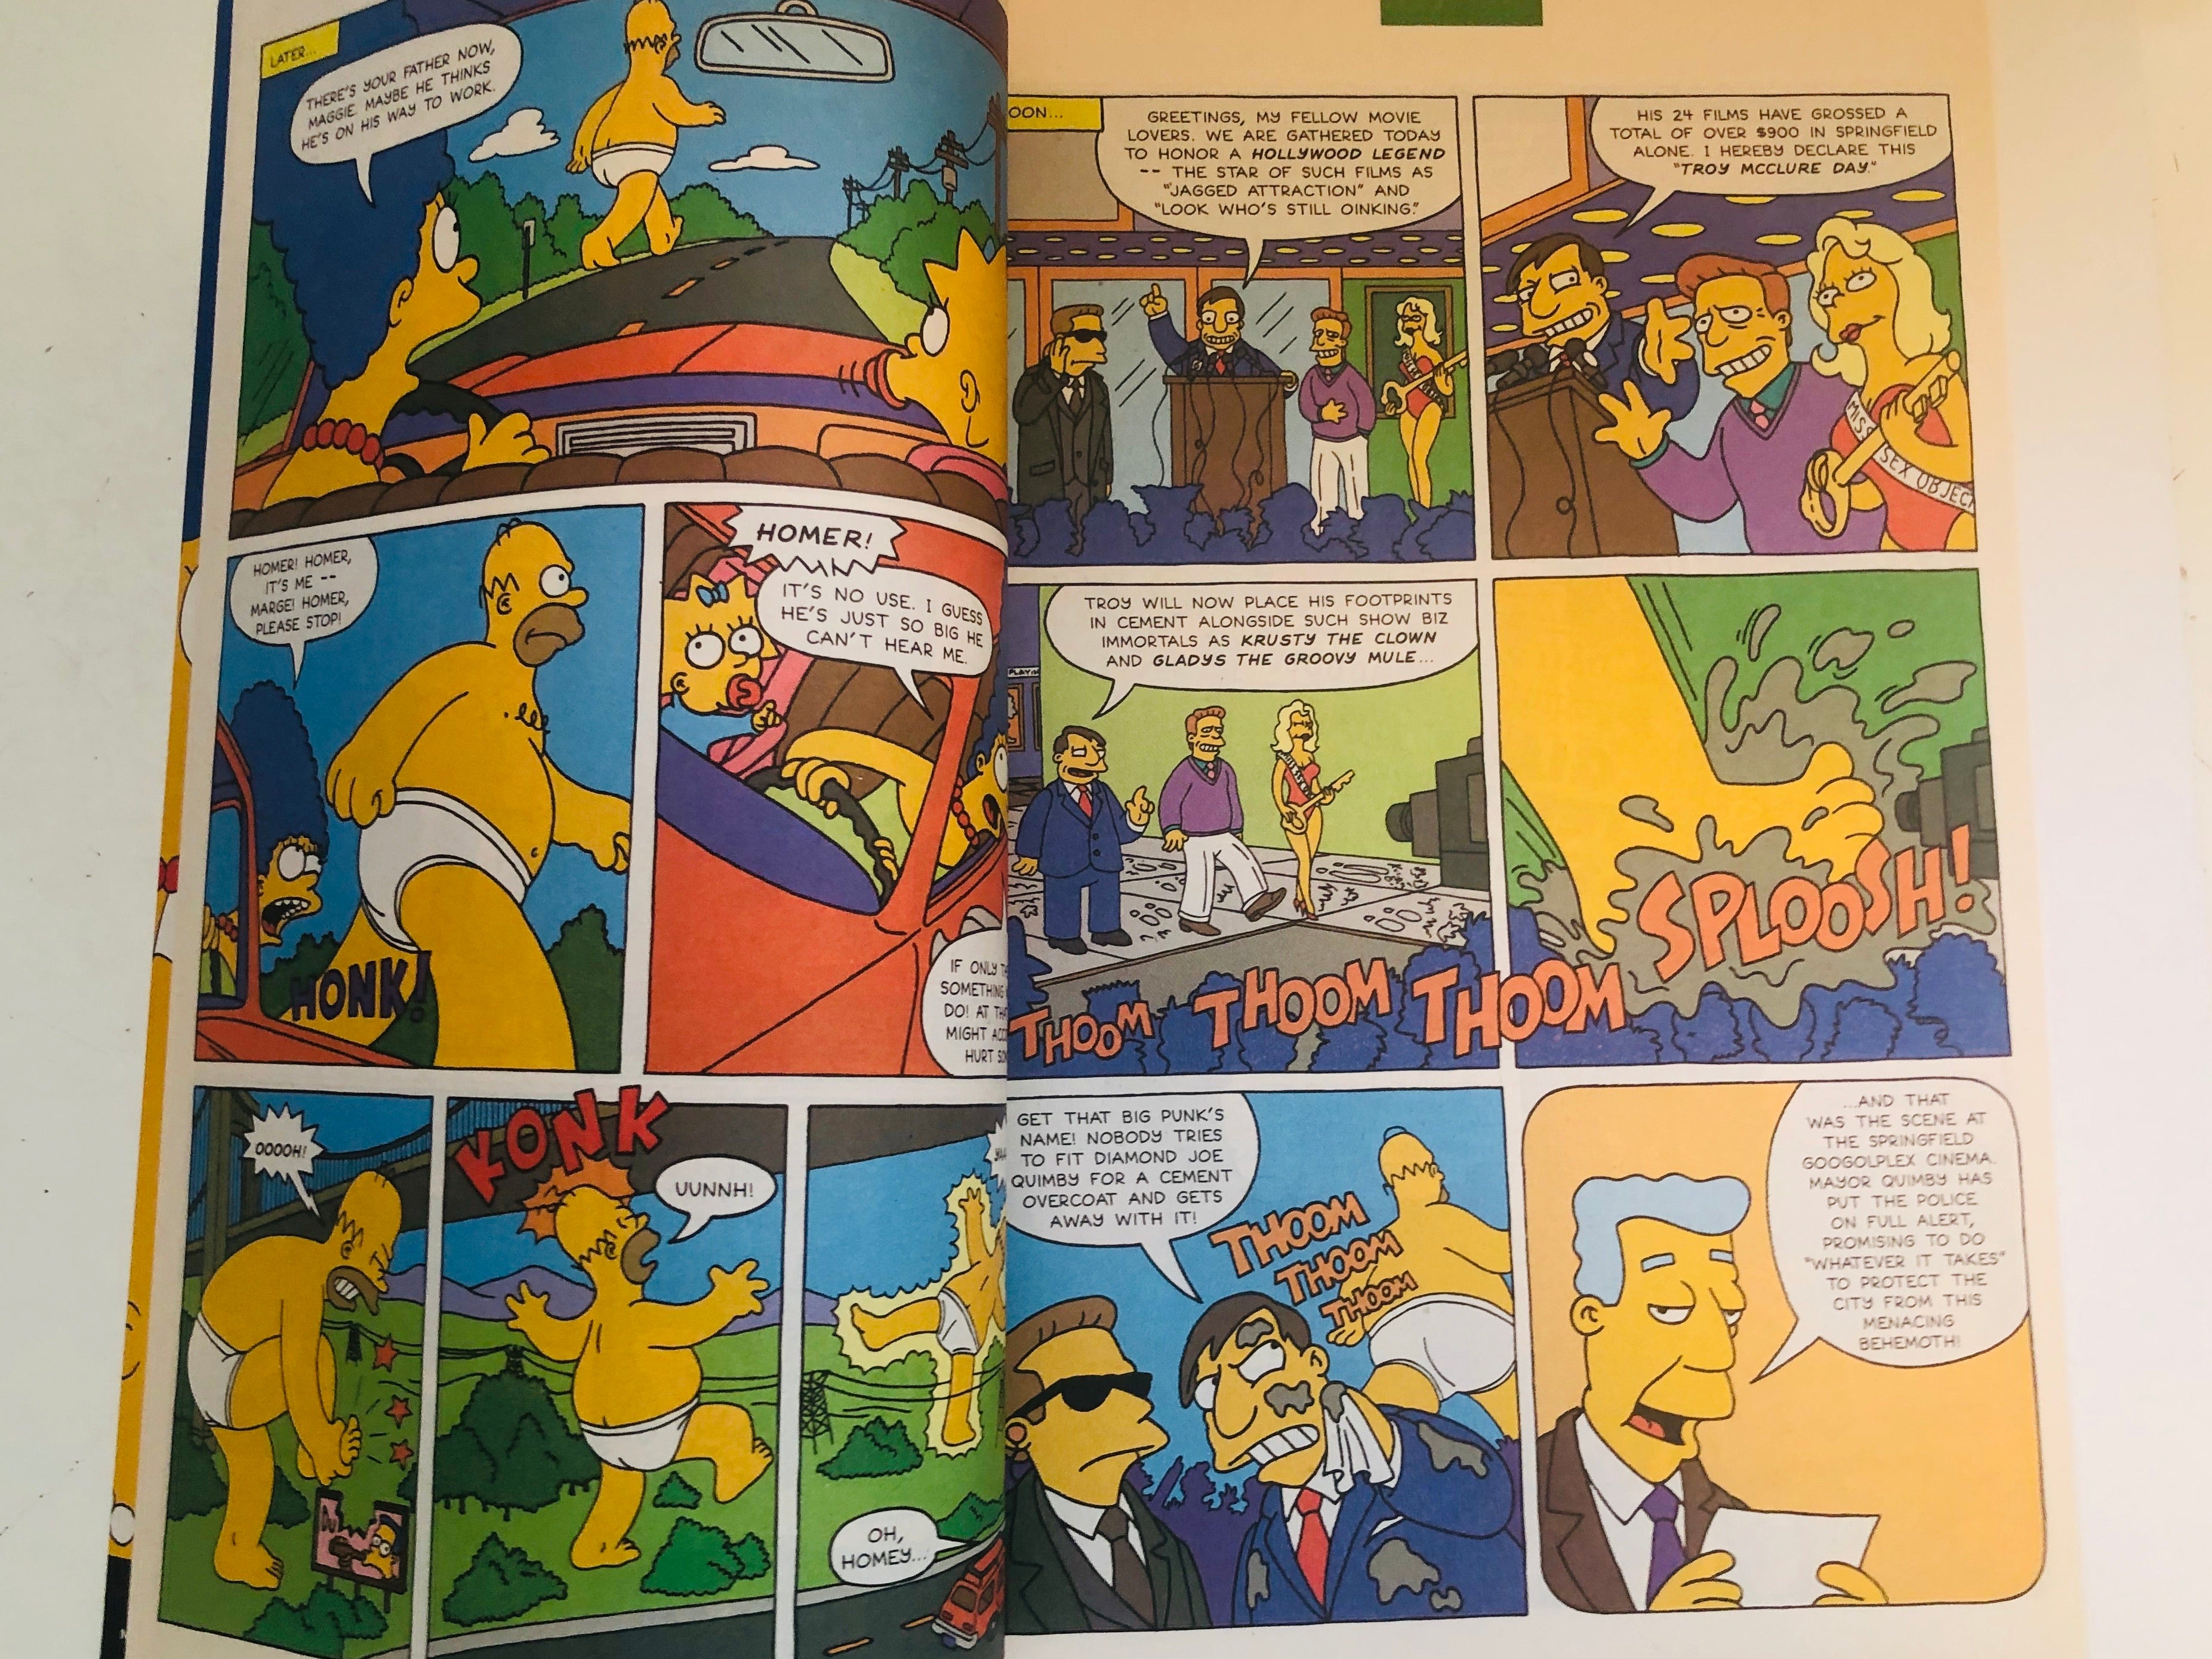 The Simpsons #1 high grade comic book